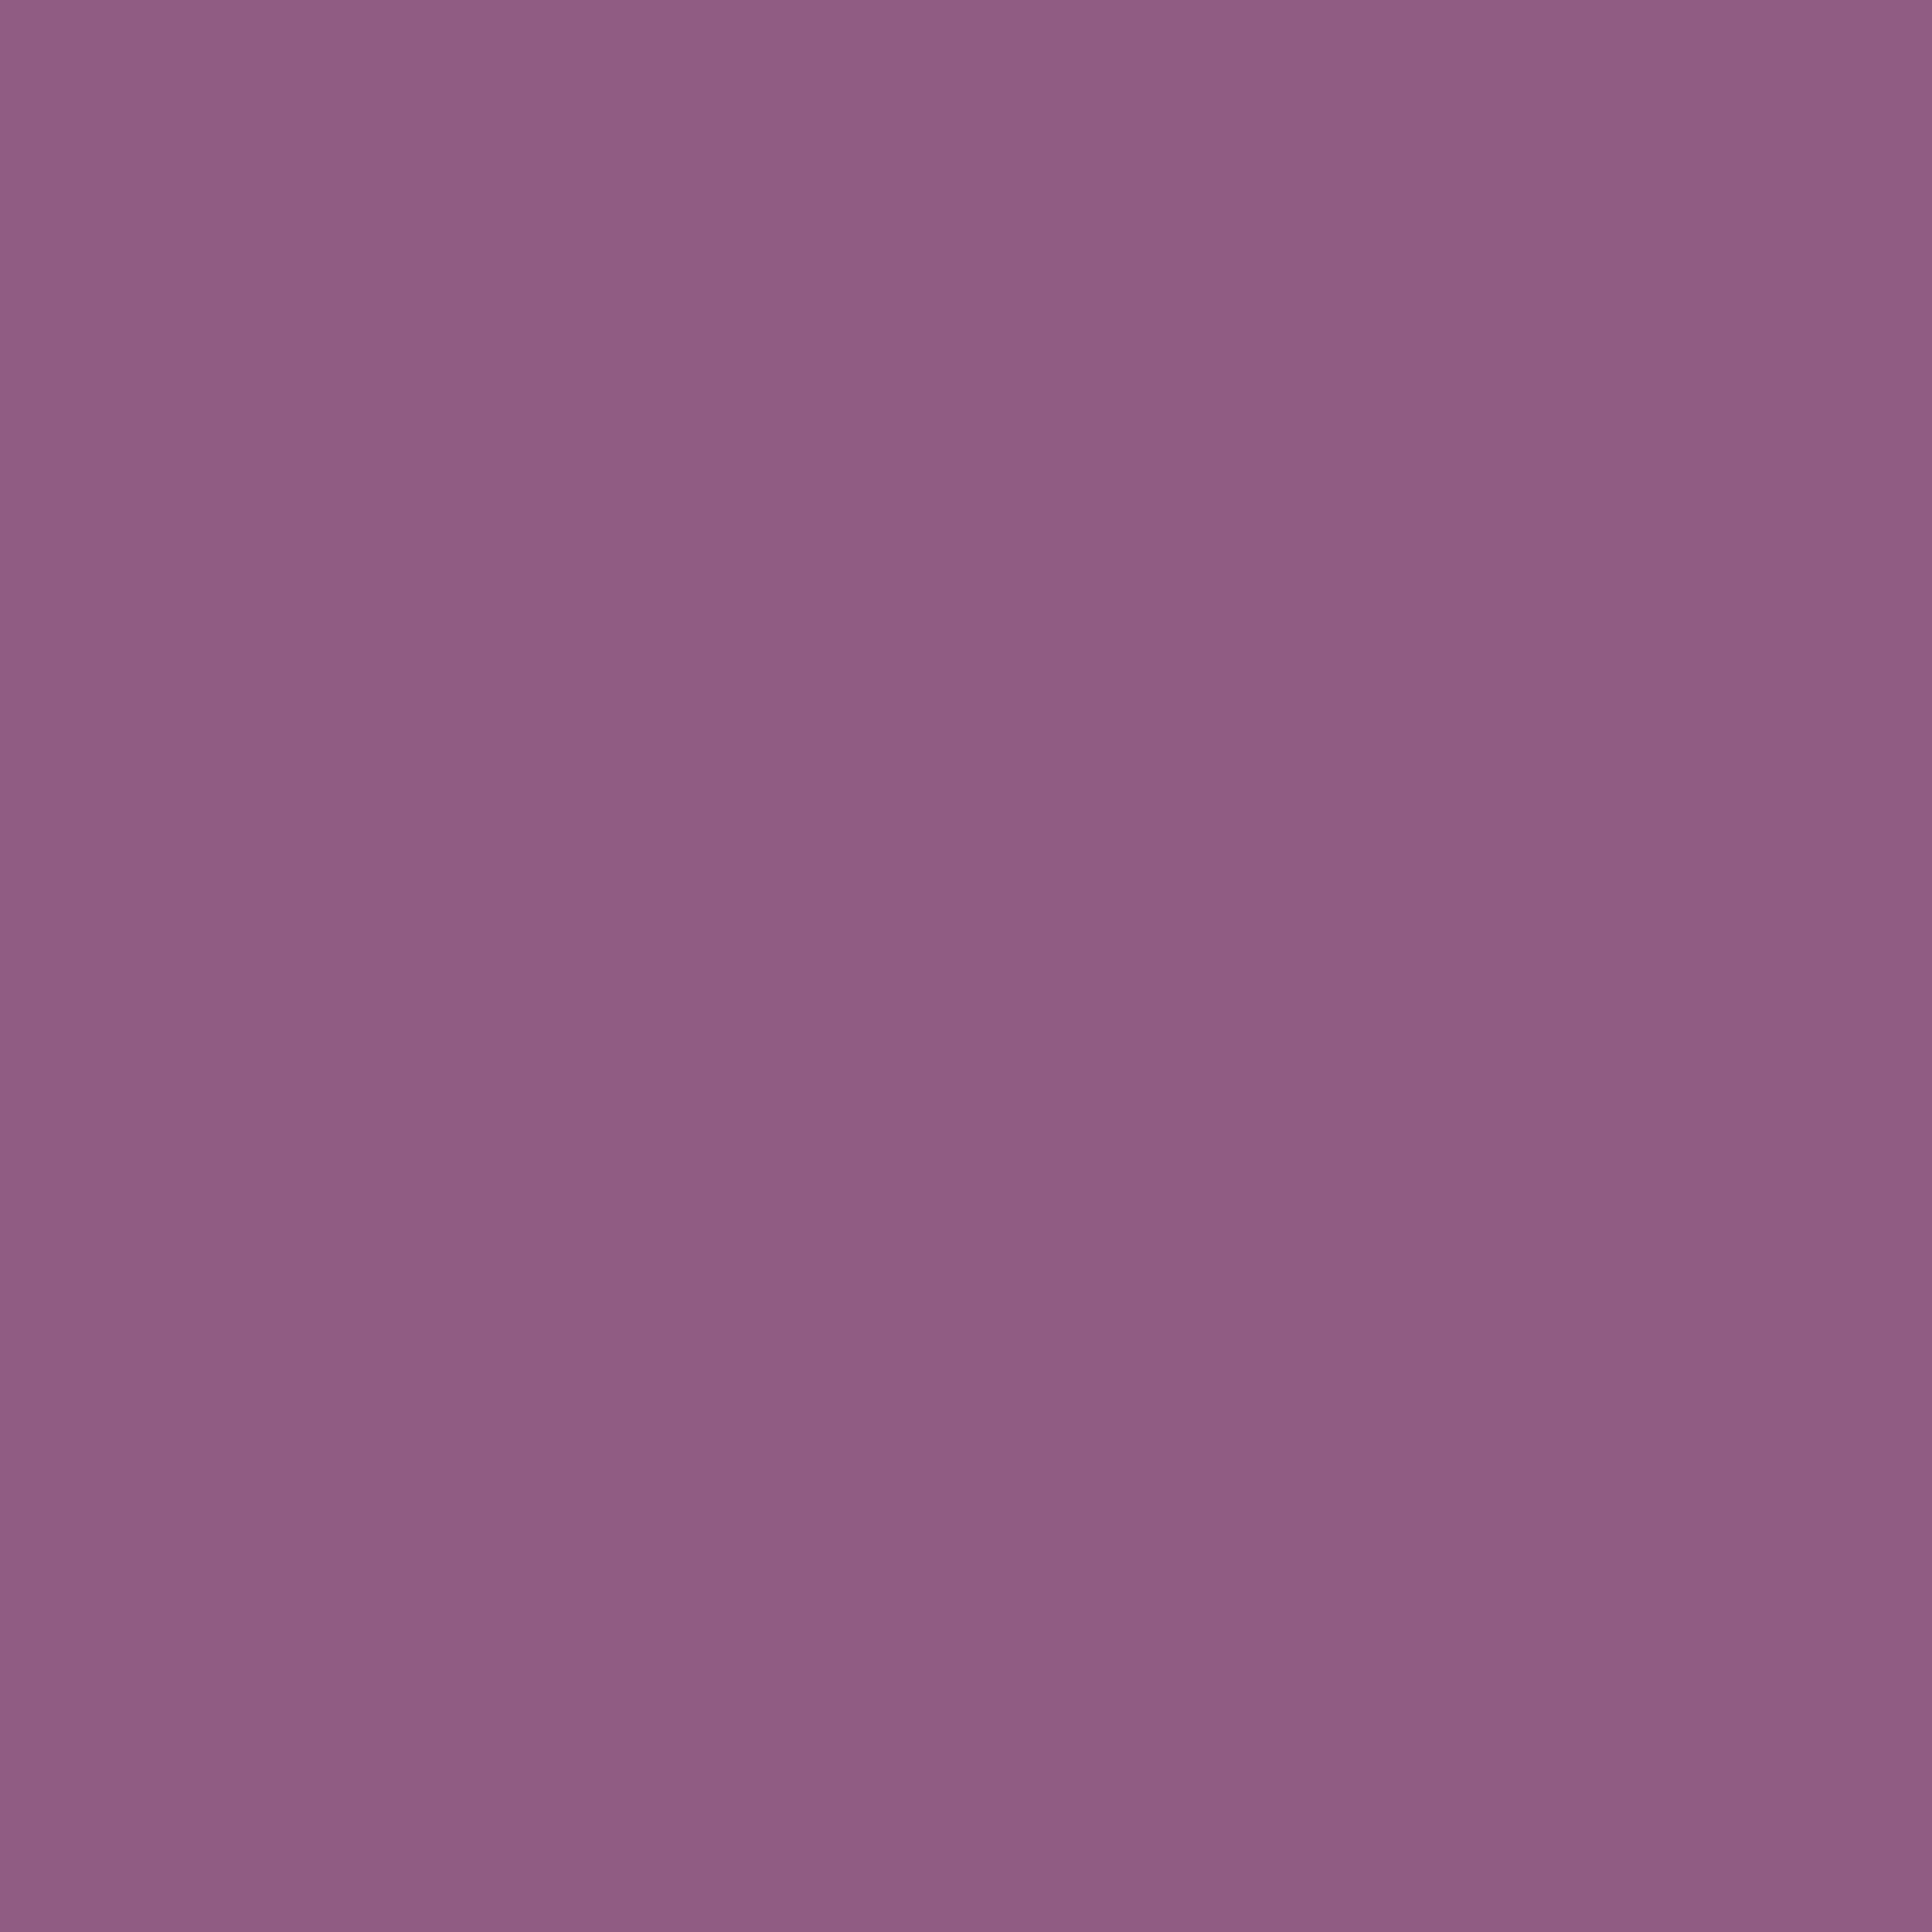 3600x3600 Antique Fuchsia Solid Color Background